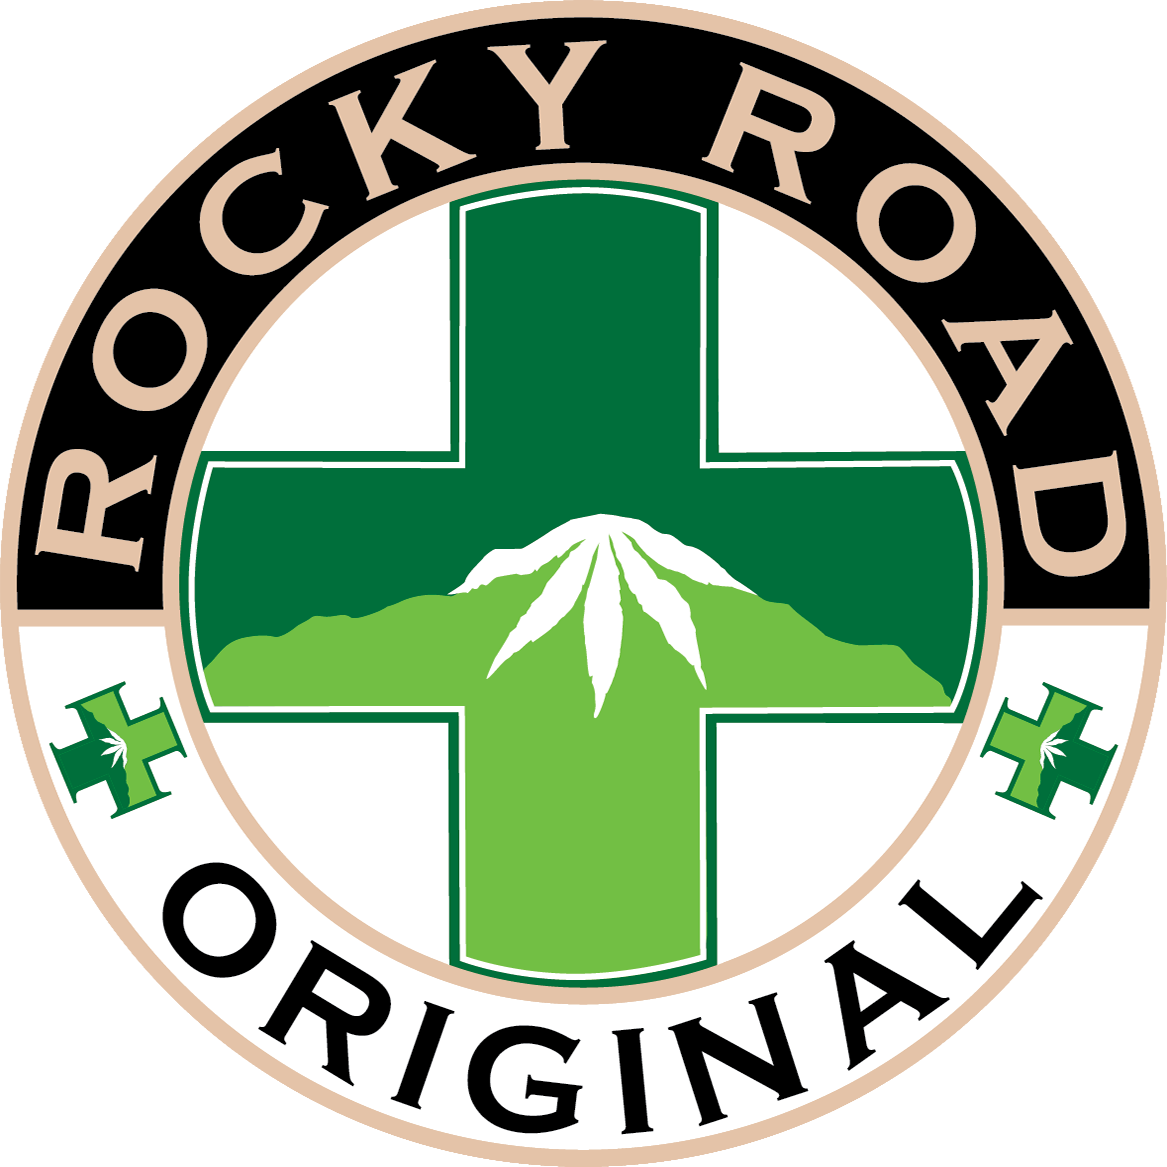 Rocky Road Remedies West (1167x1167)